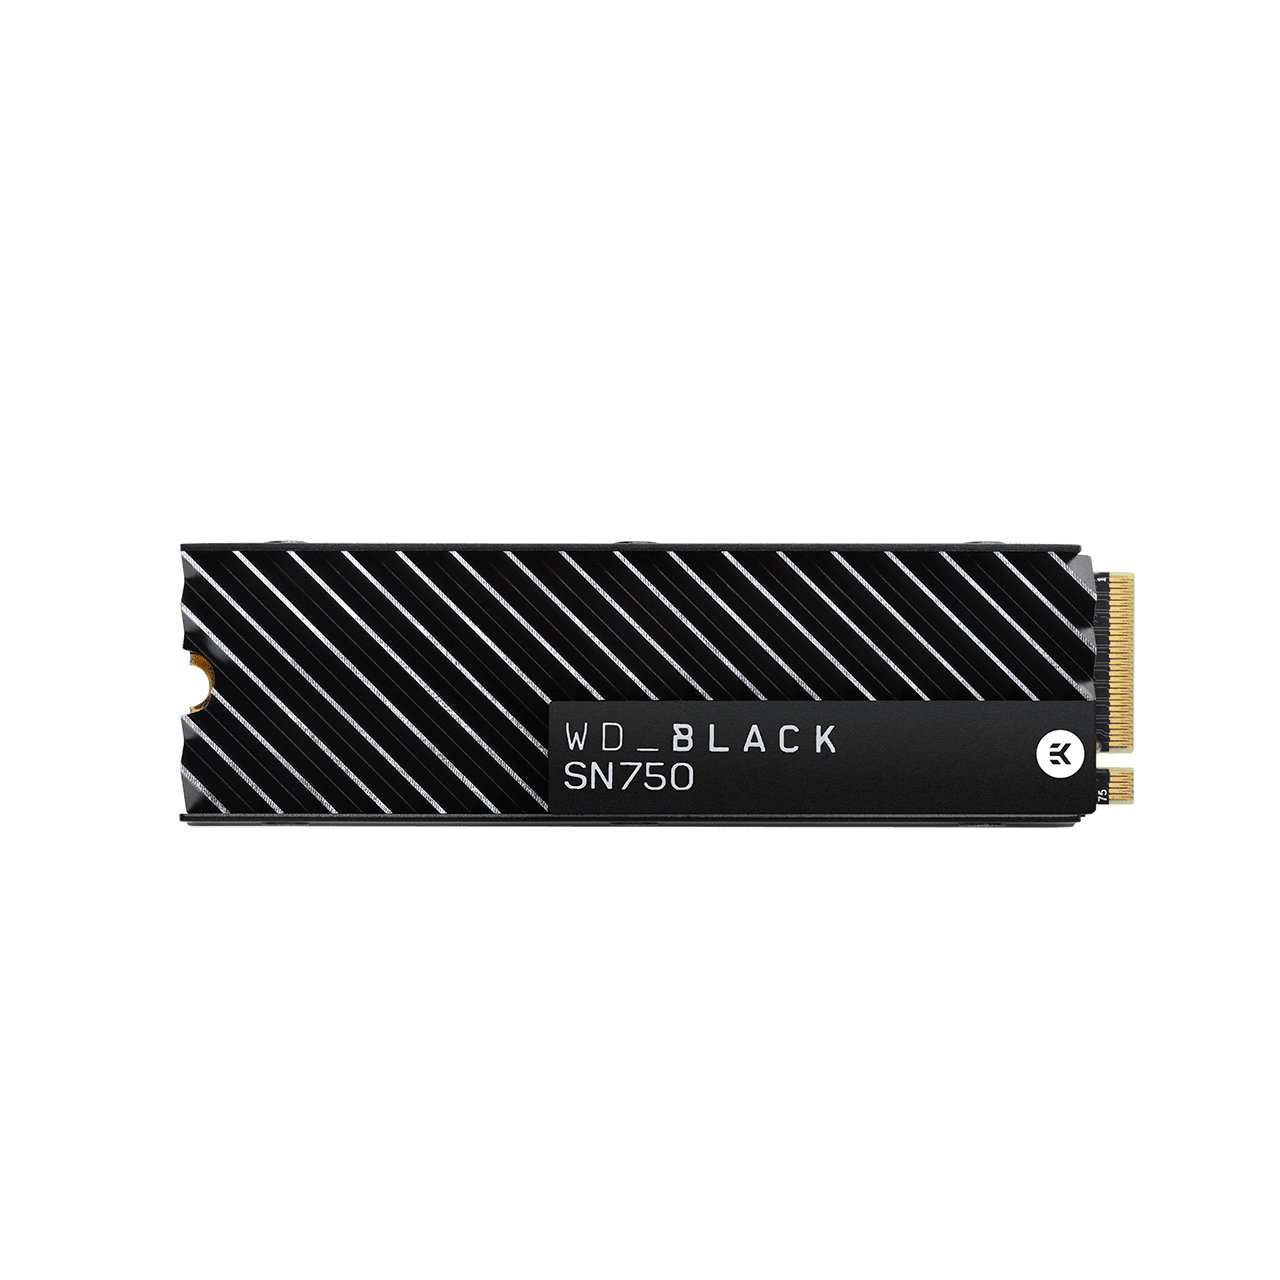 WD_BLACK SN750 NVMe SSD 500GB with Heatsink - Image1